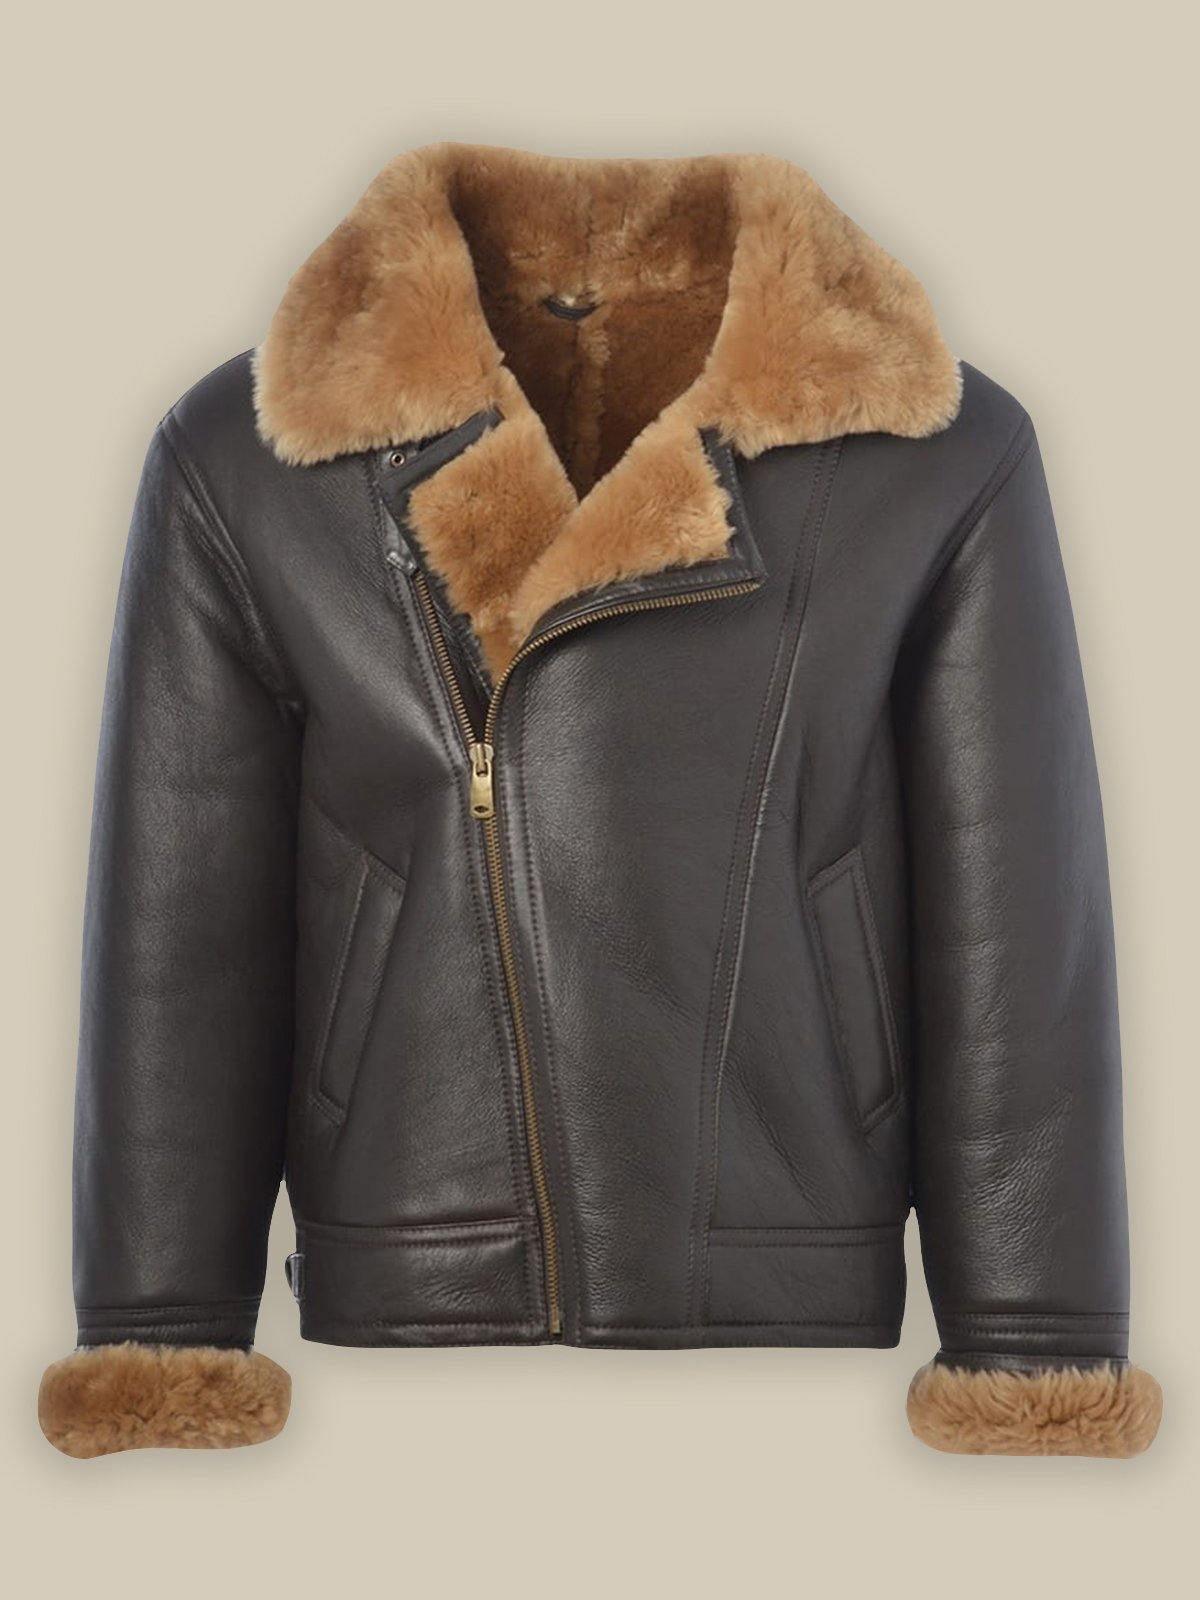 B3 Shearling Bomber Leather Jacket For Men